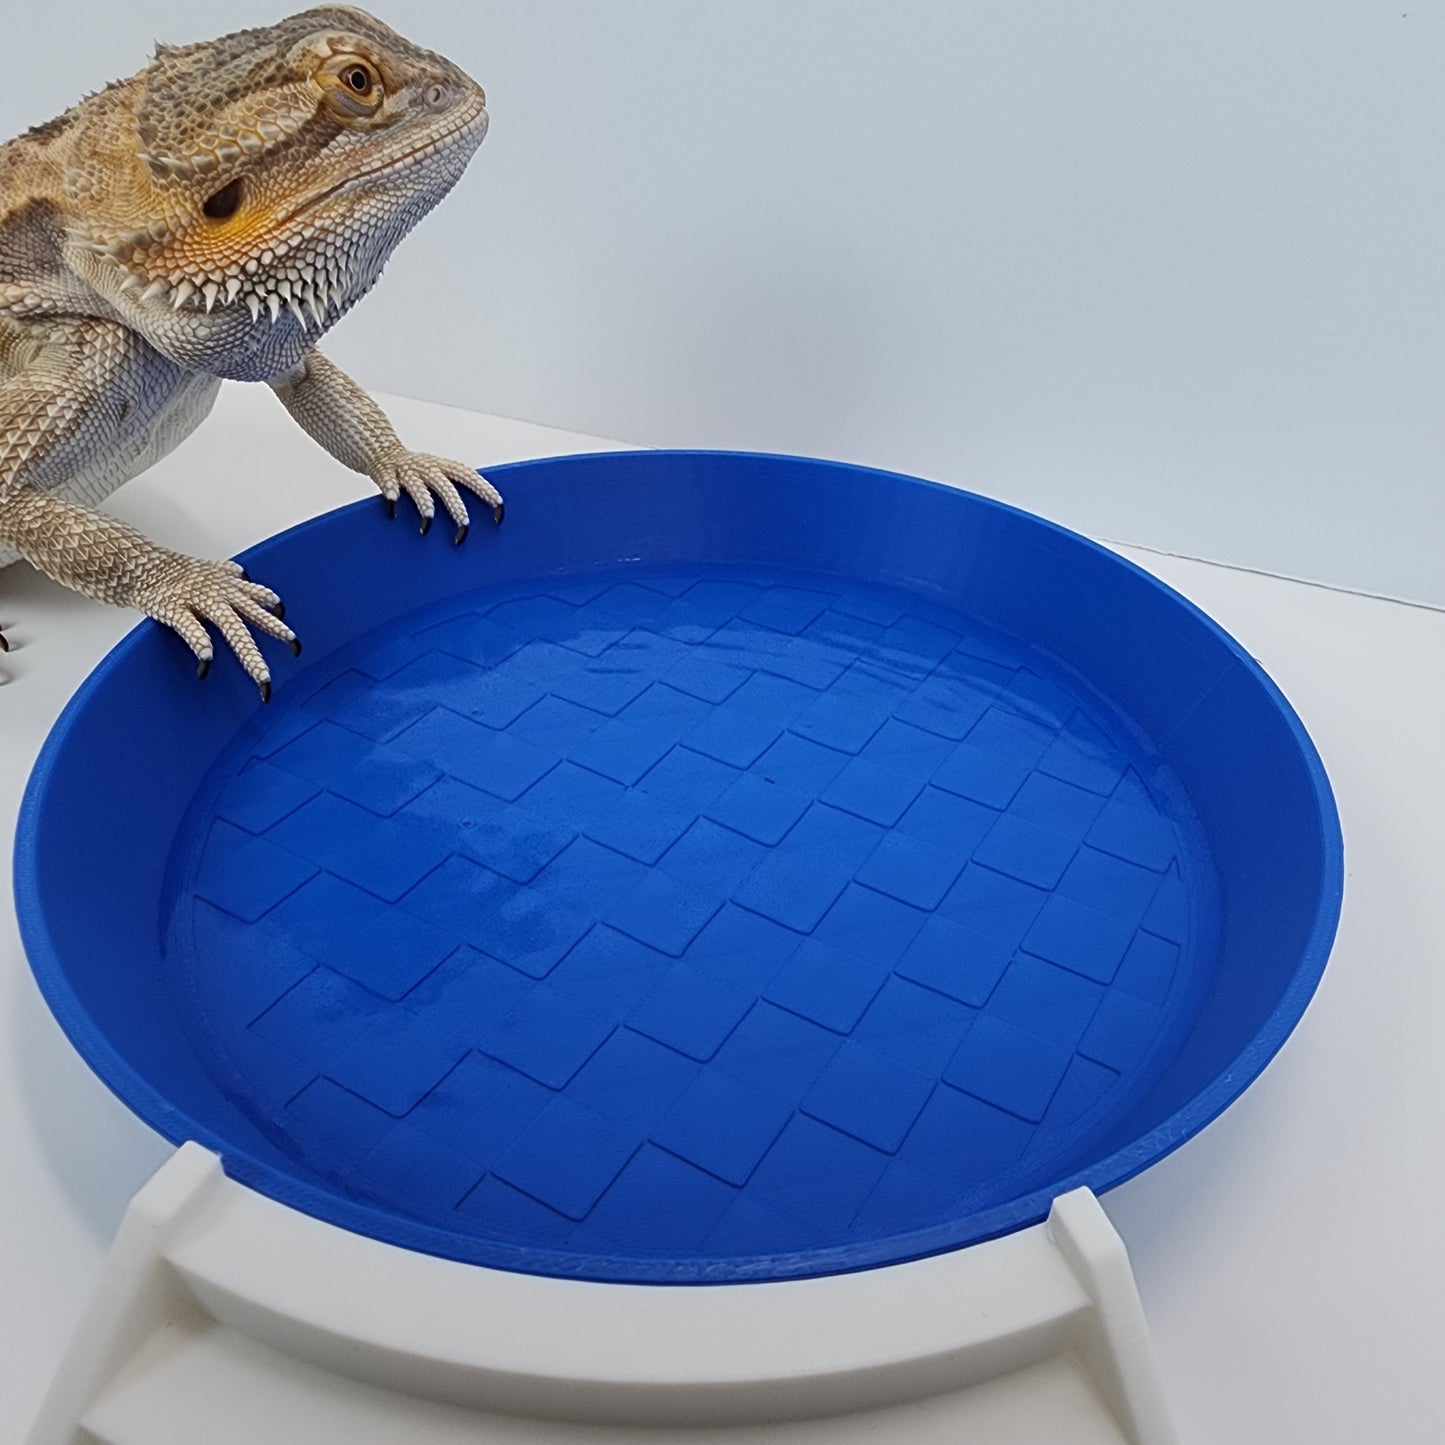 Bearded Dragon/Gecko water bowl and bathing spot | Mini Baby pool for reptile terrarium | Bearded dragon tank decor